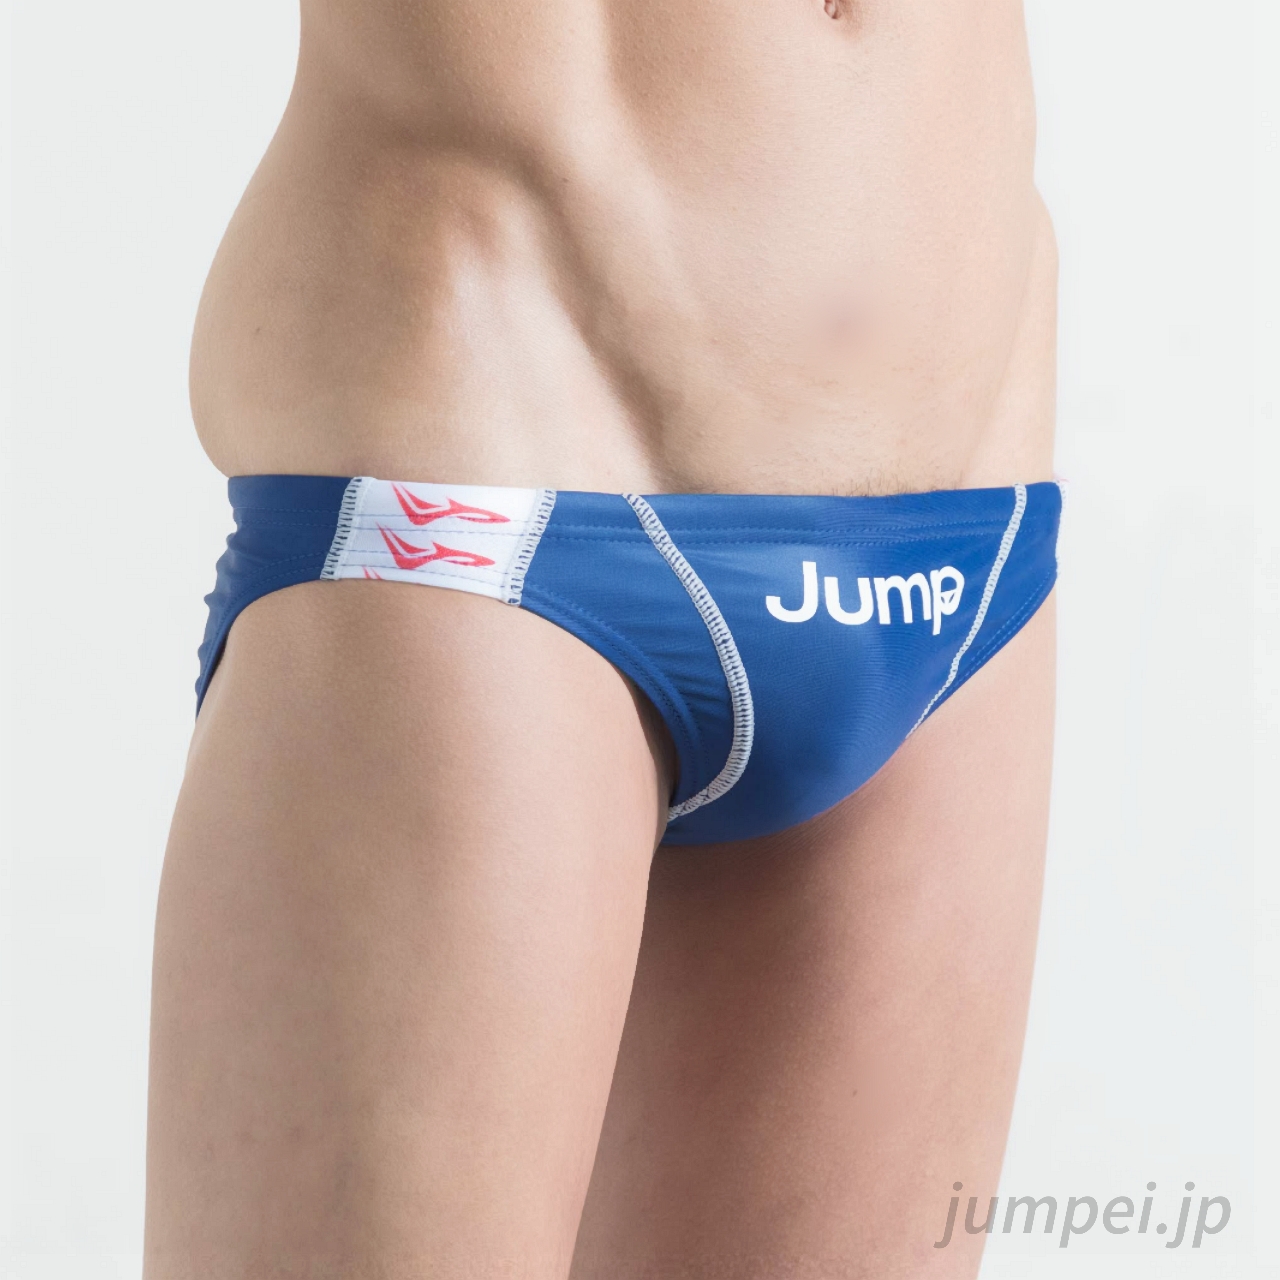 JUMP ONLINE STORE / JUMP メンズ競泳水着 SIDE-LOGOスーパーウェット ネイビー ビキニタイプ ローライズ競パン